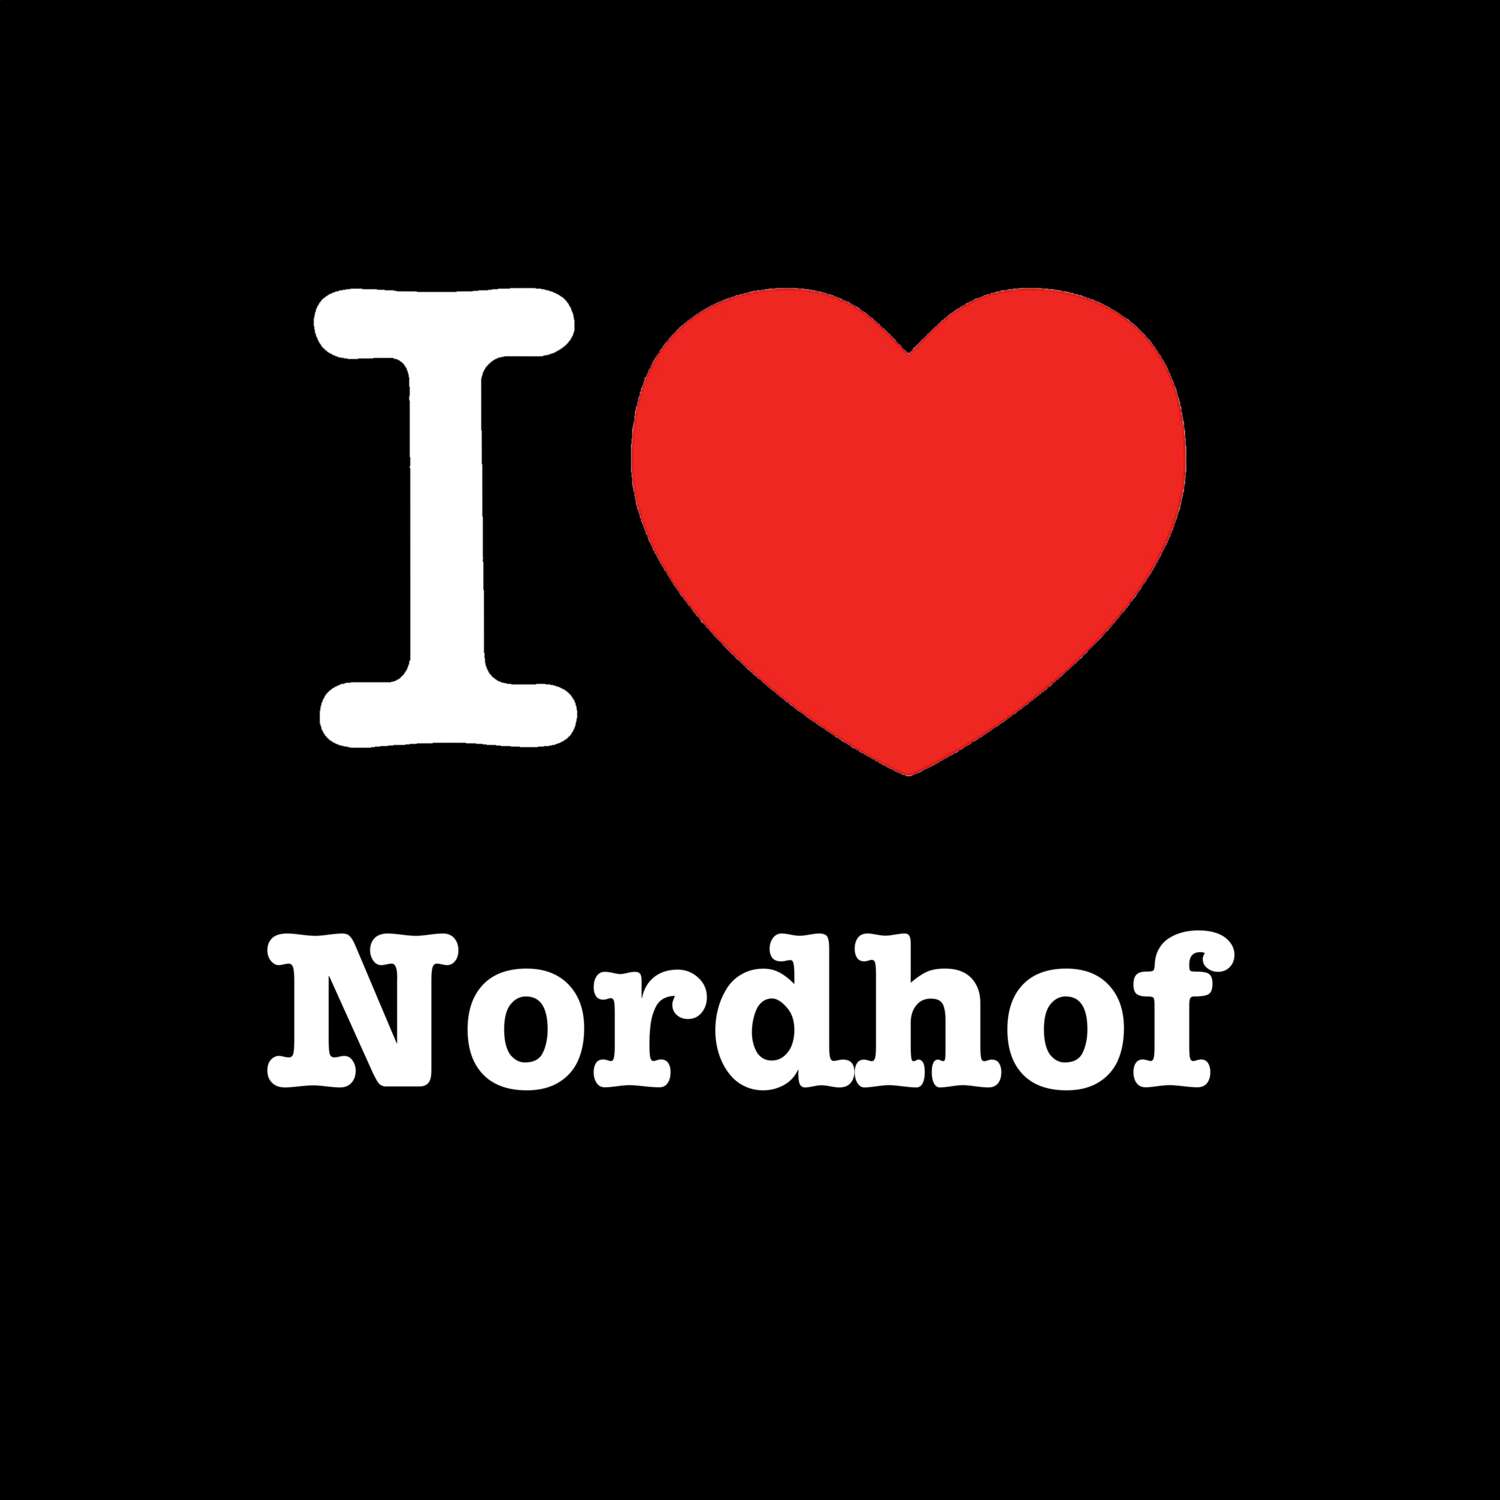 Nordhof T-Shirt »I love«